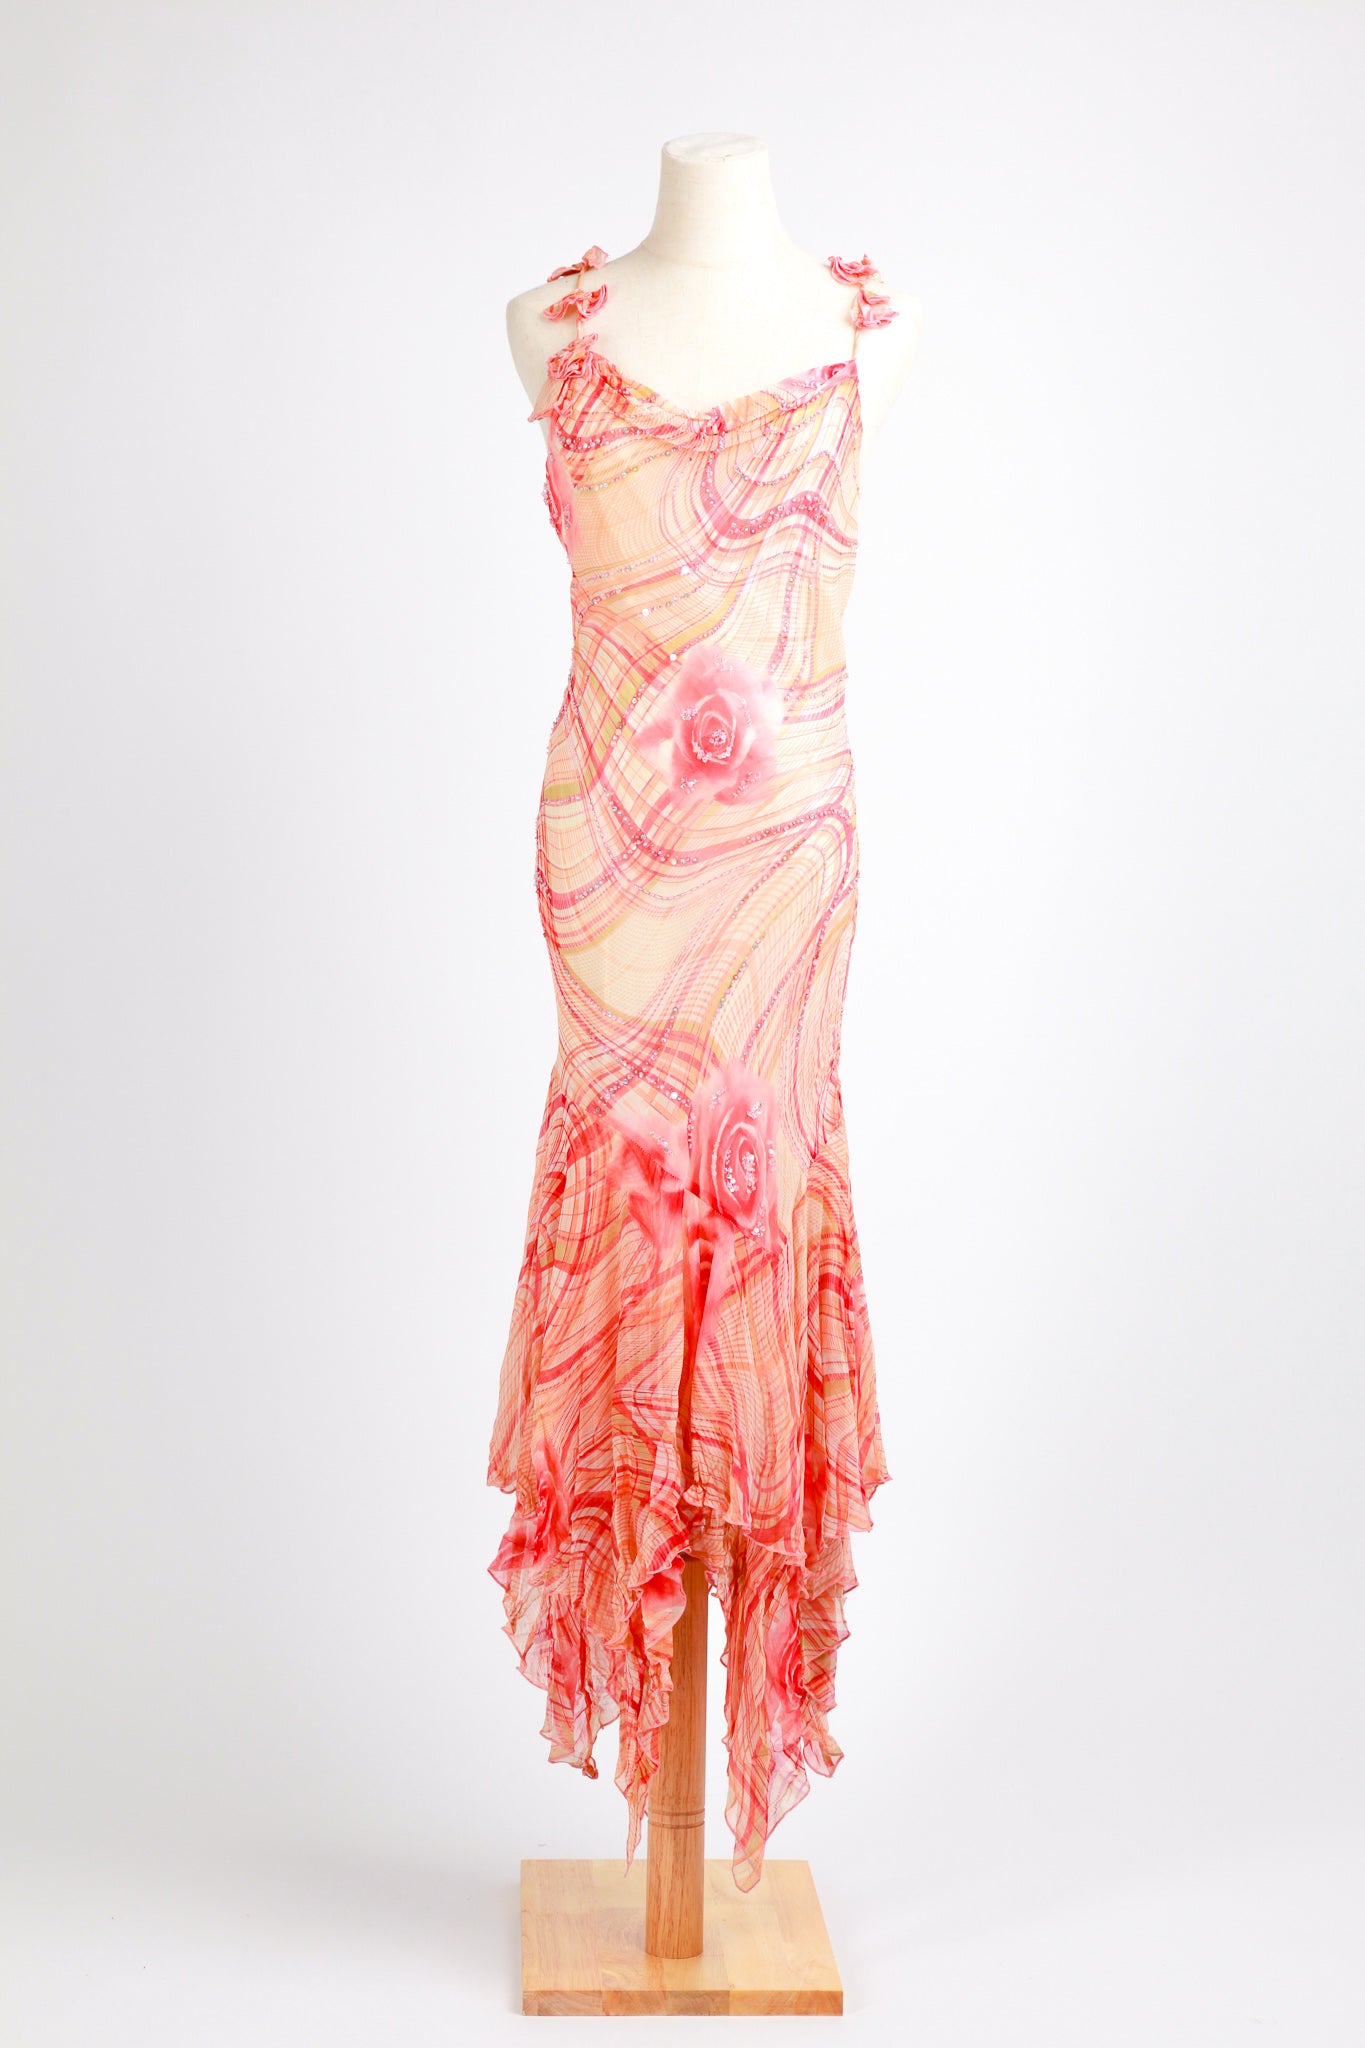 Diane Freis - Whimsical Garden Orange Pink Roses Dress - Iconic